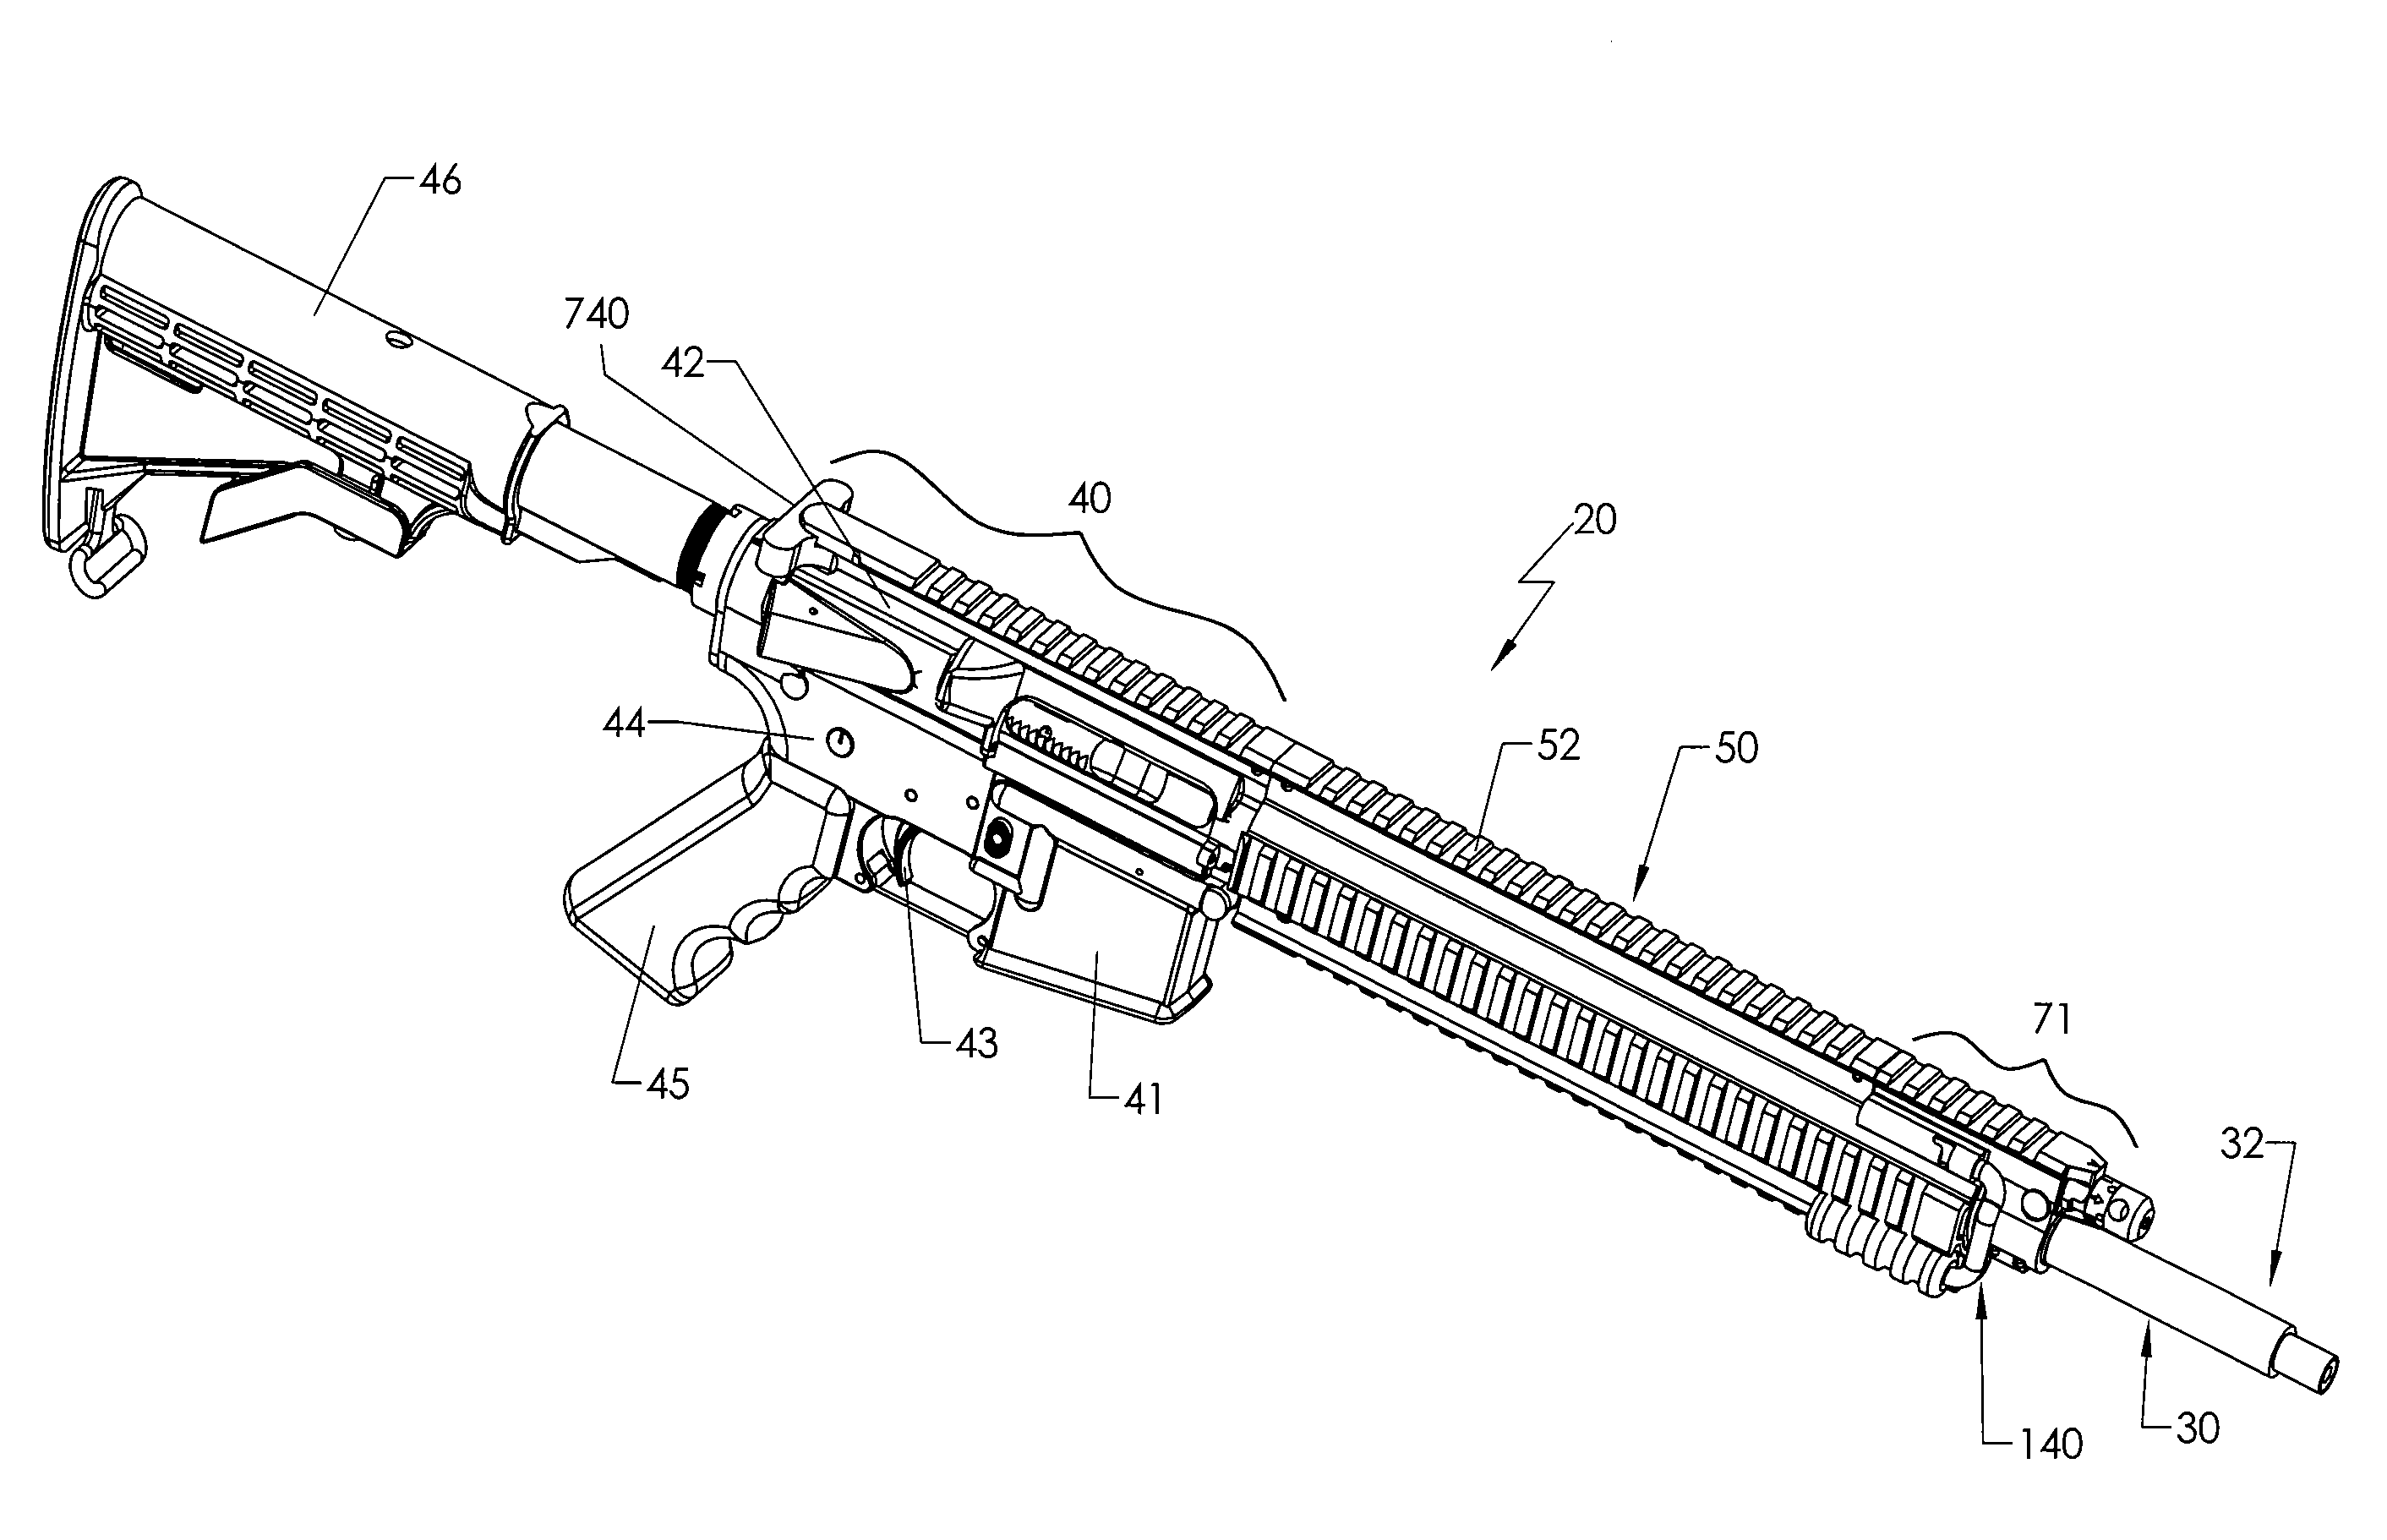 Firearm with quick coupling barrel interlock system